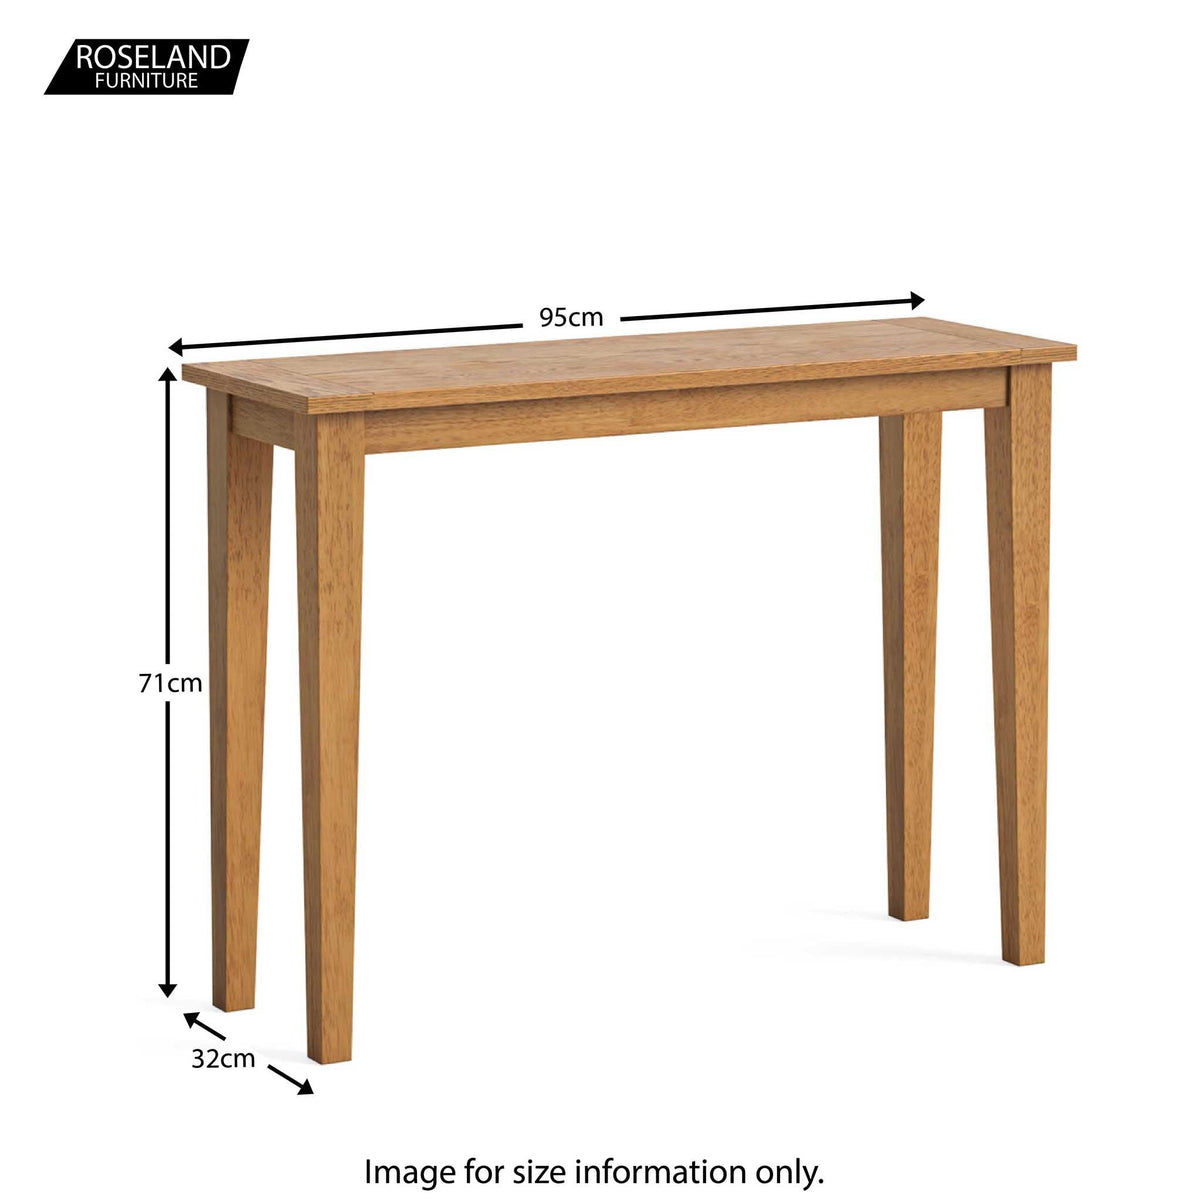 Fran Oak Hallway Console Table dimensions guide